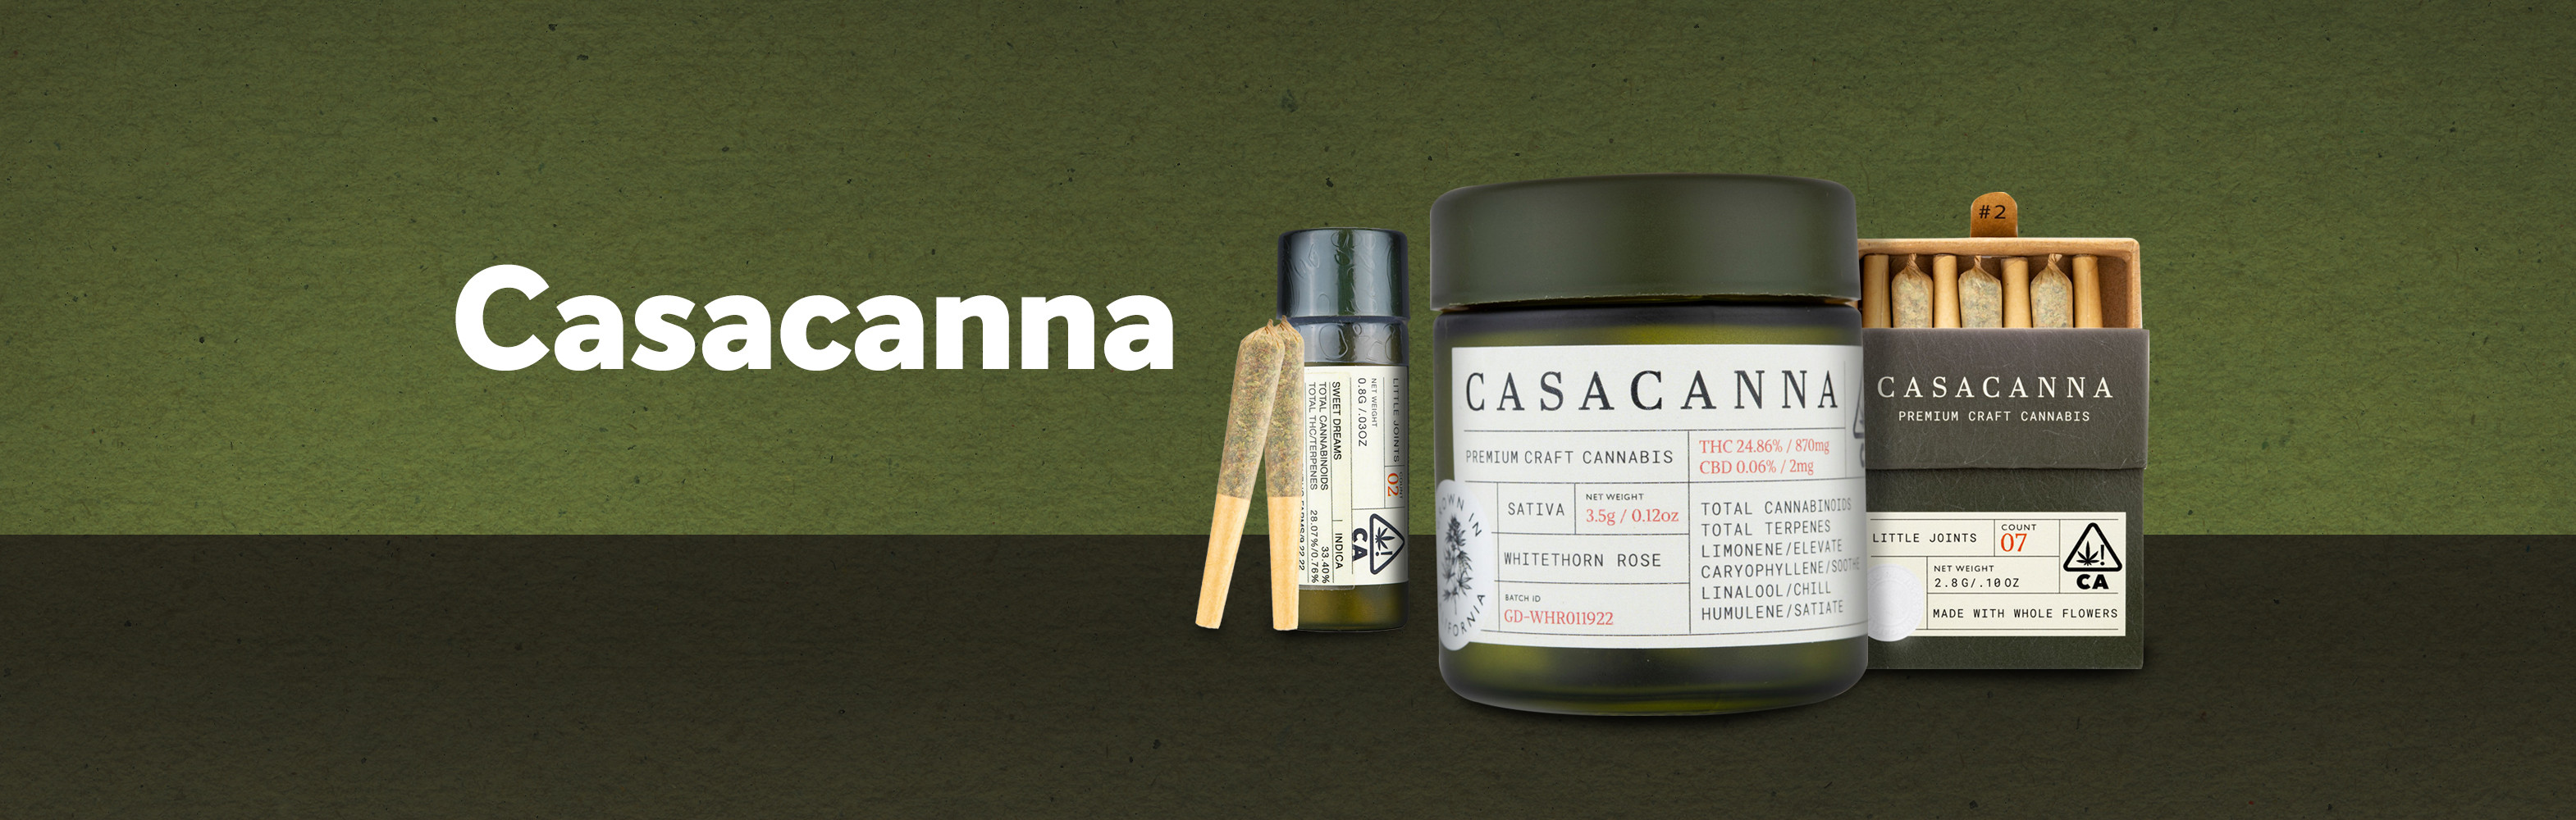 Order Casacanna cannabis products on Grassdoor delivery